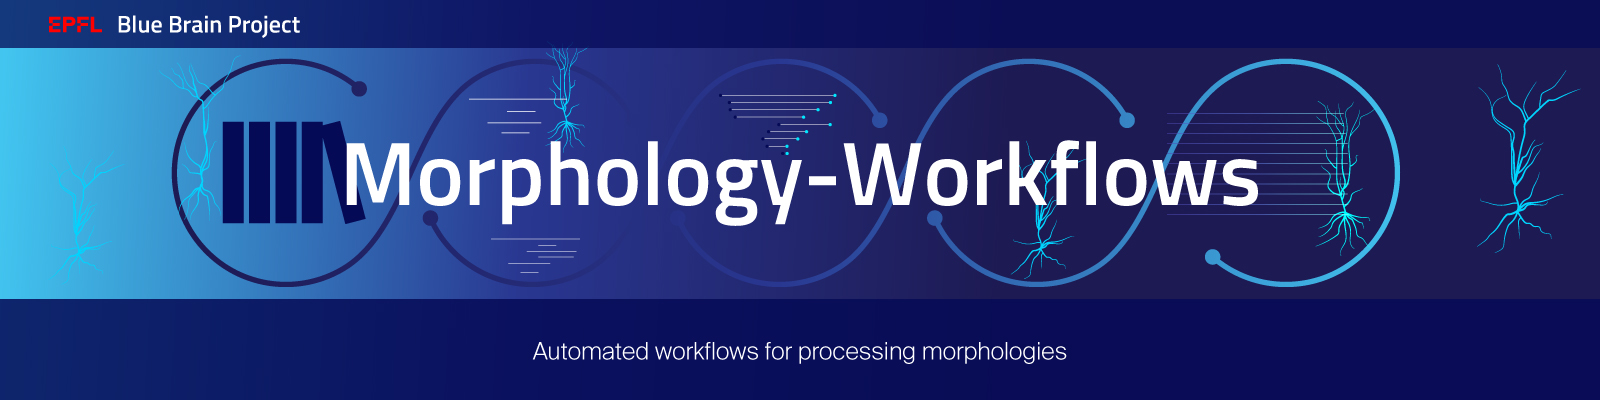 _images/BBP-Morphology-Workflows.jpg